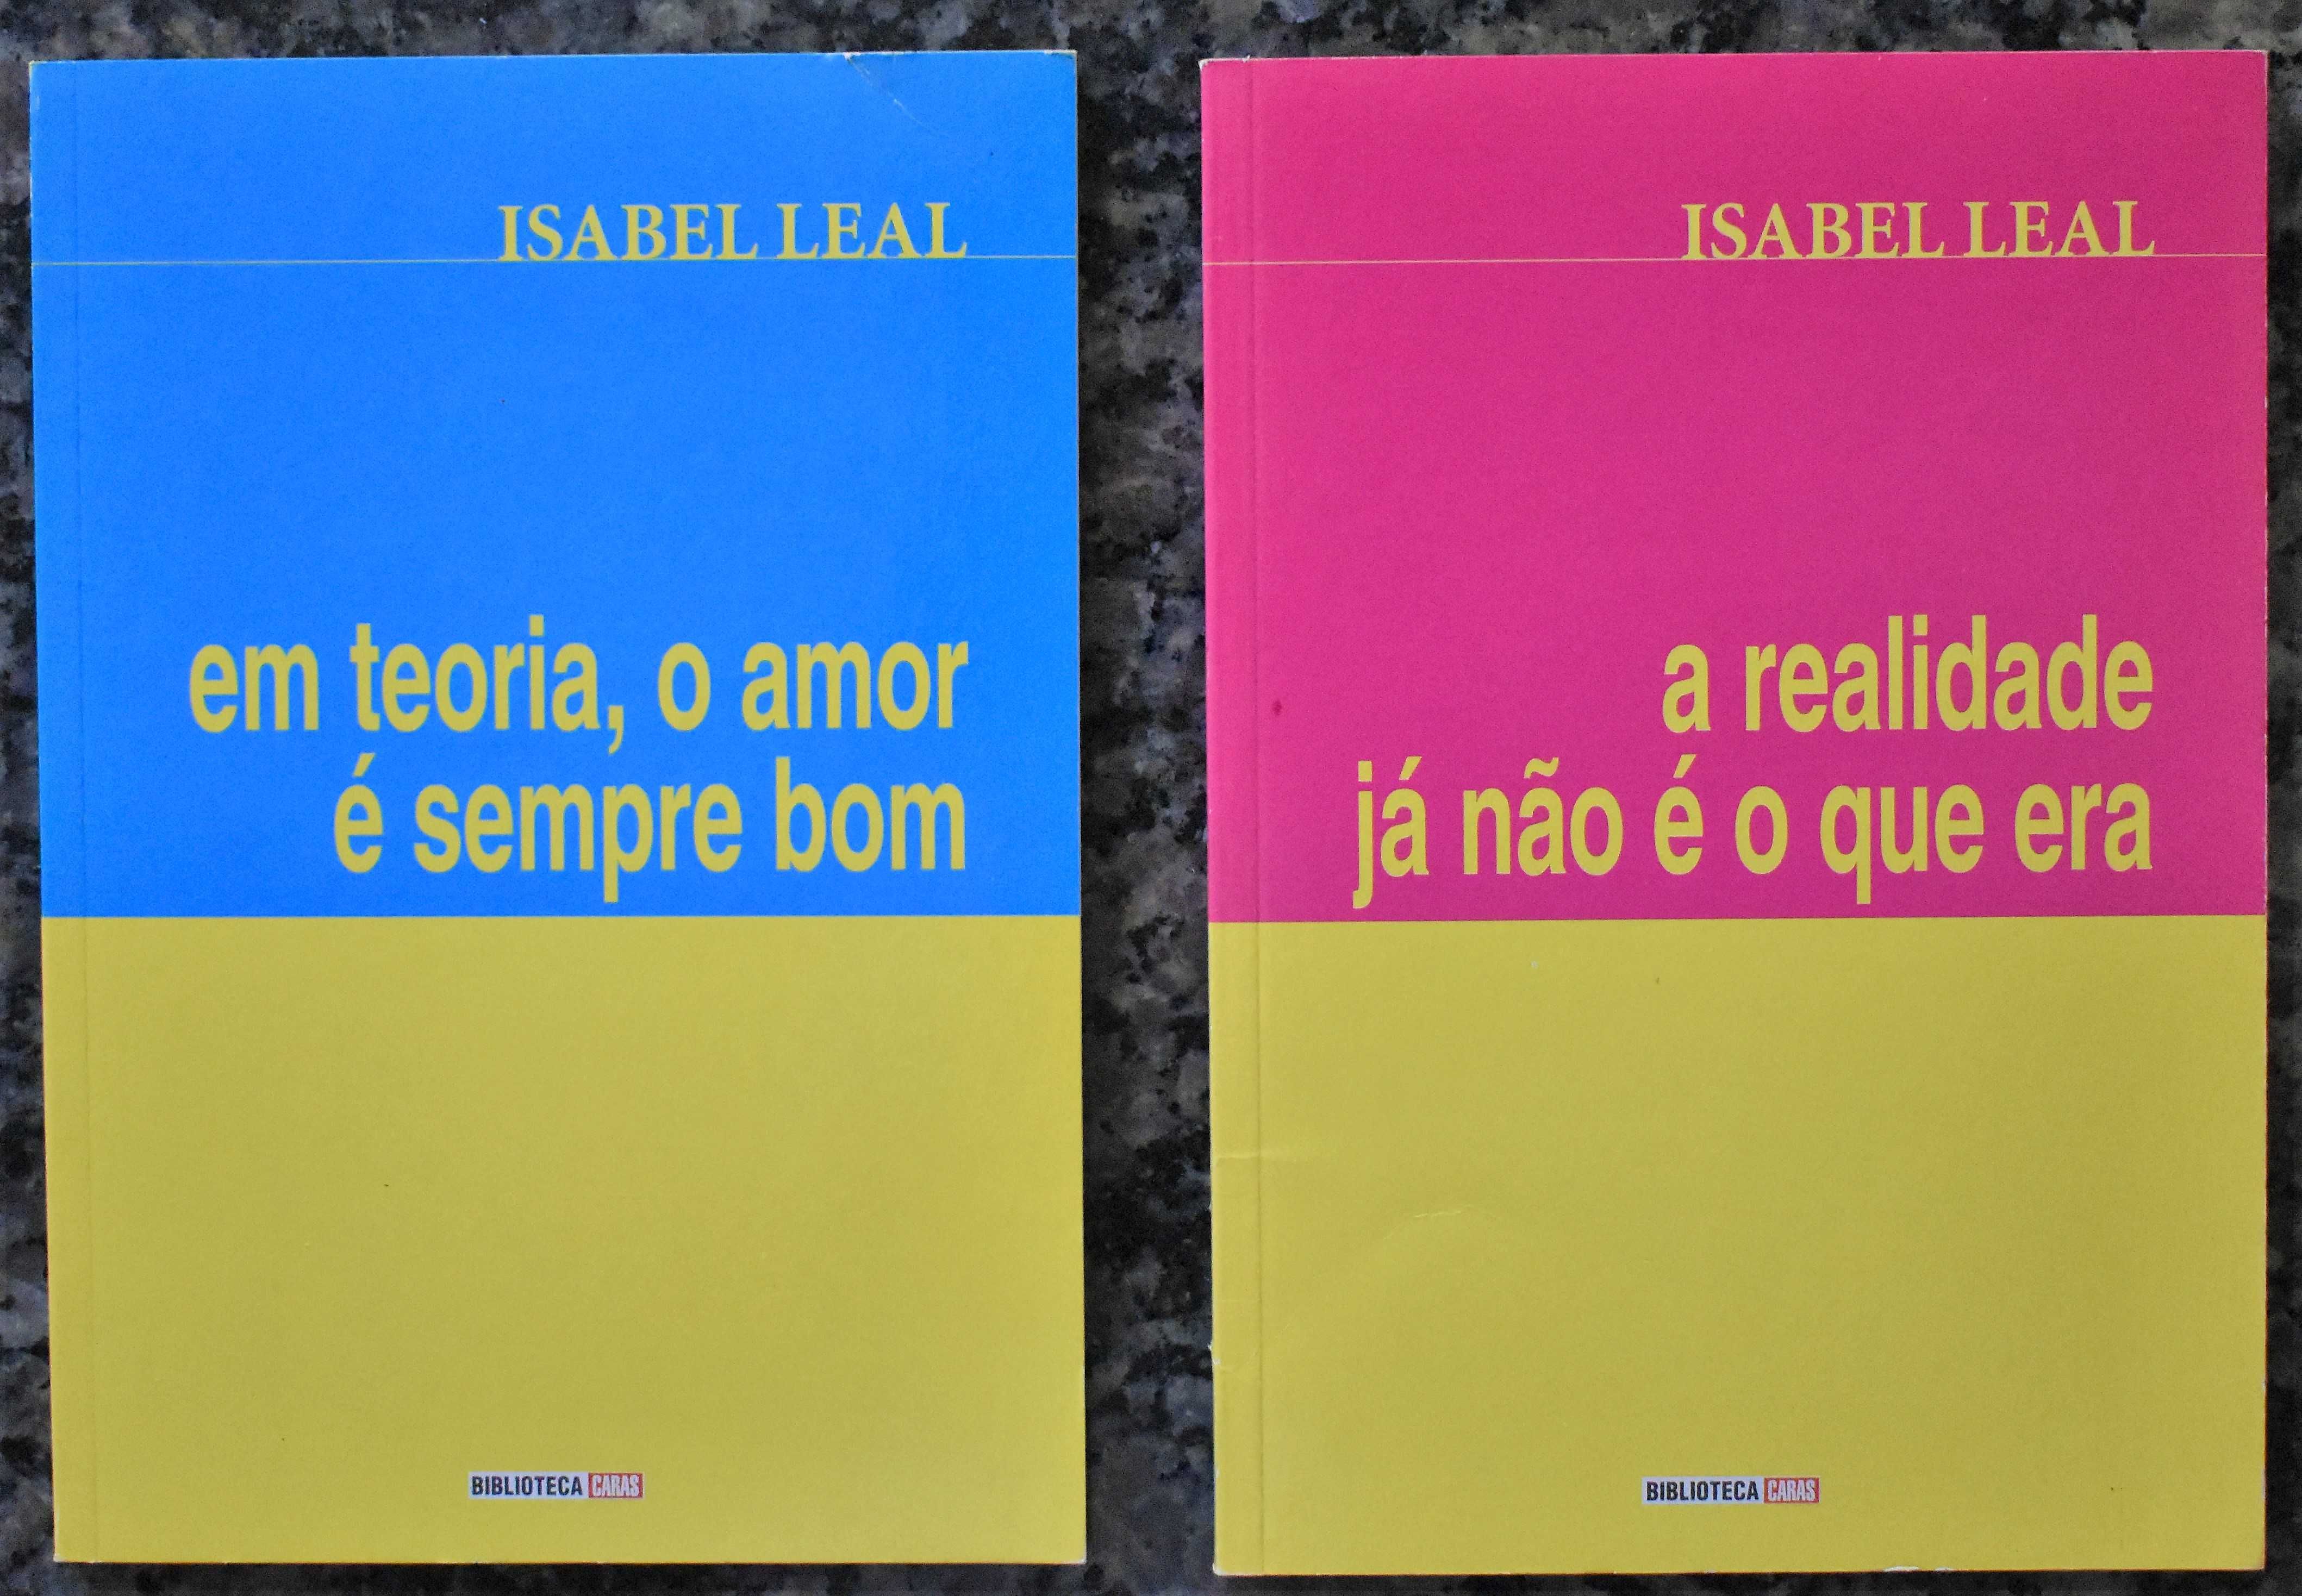 Isabel Leal - Os 2 Livros de crónicas "Comportamentos"